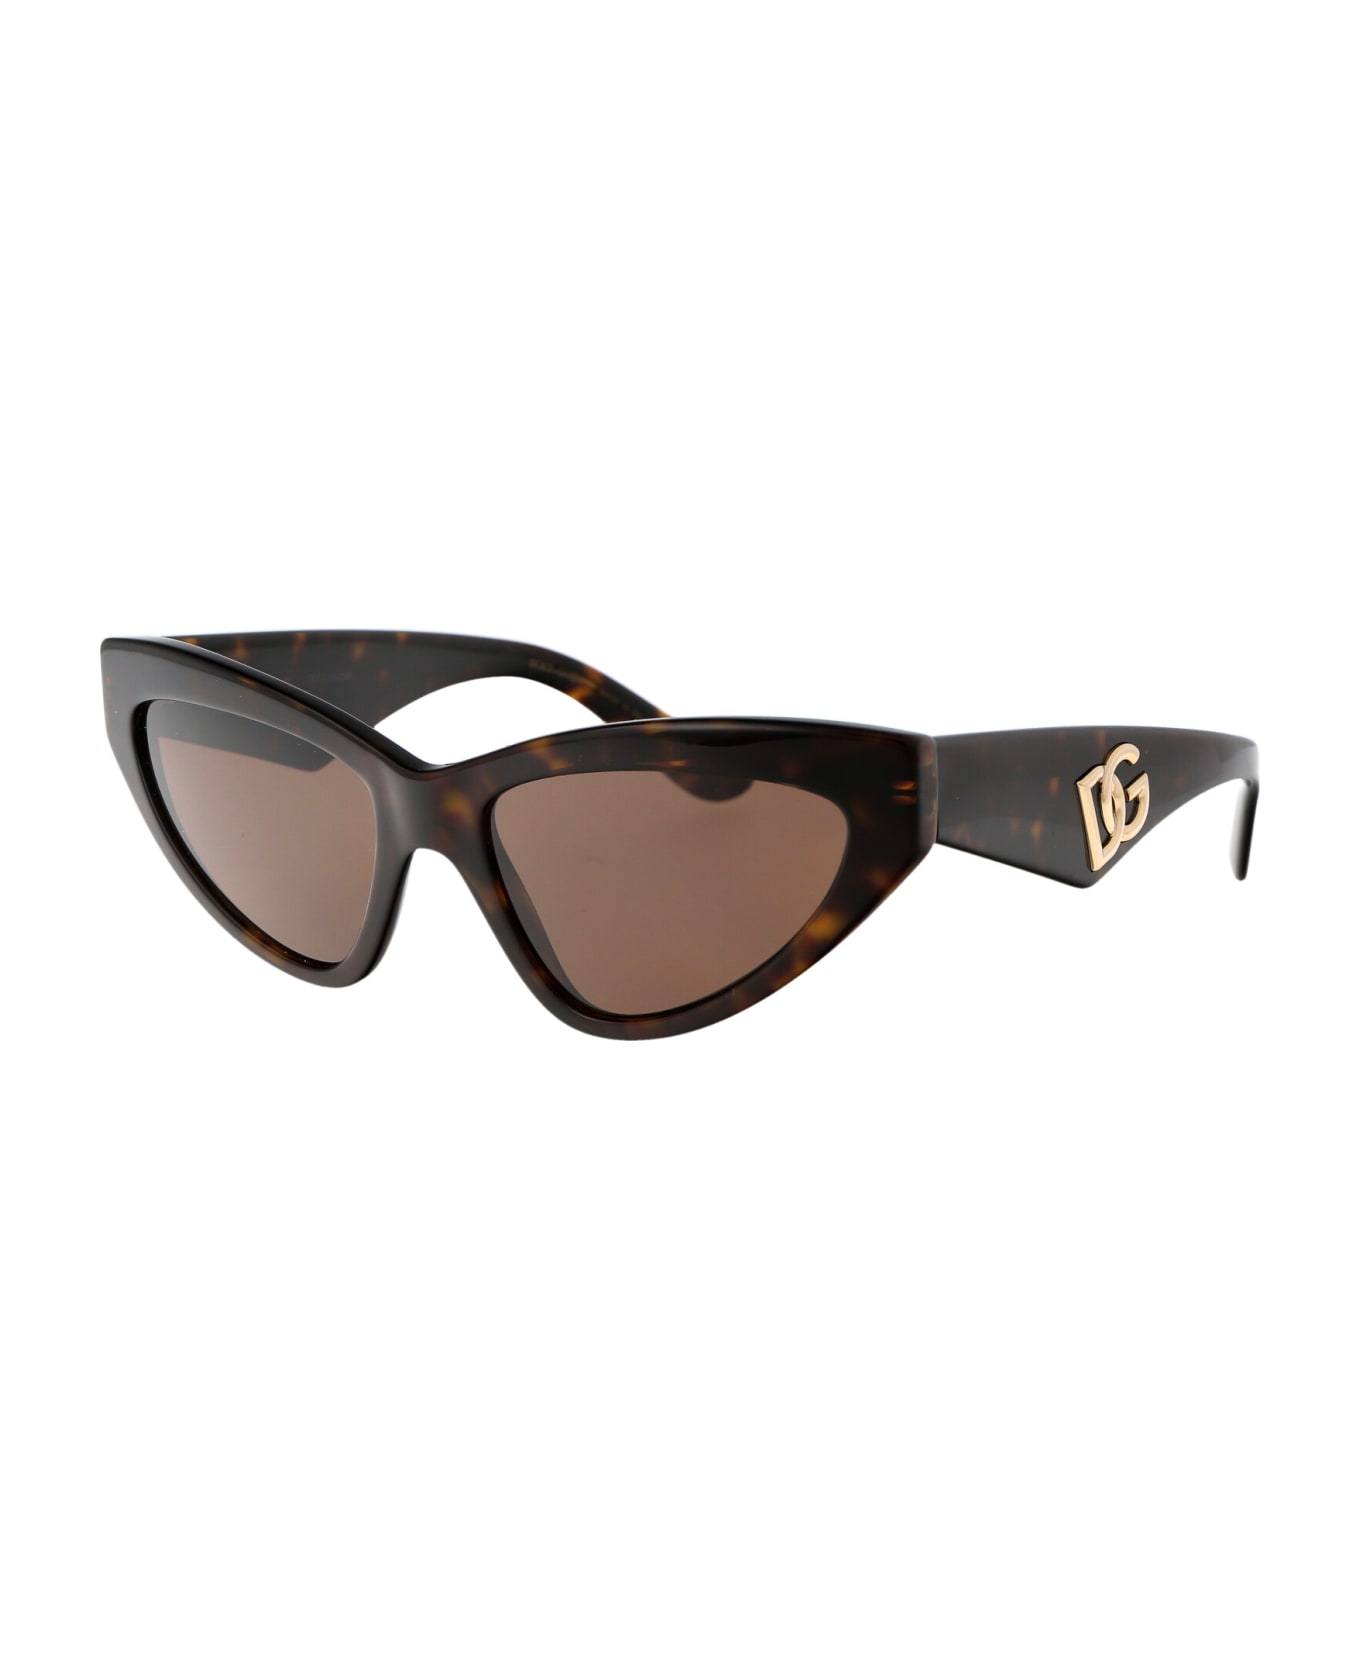 Dolce & Gabbana Eyewear 0dg4439 Sunglasses - 502/73 HAVANA サングラス